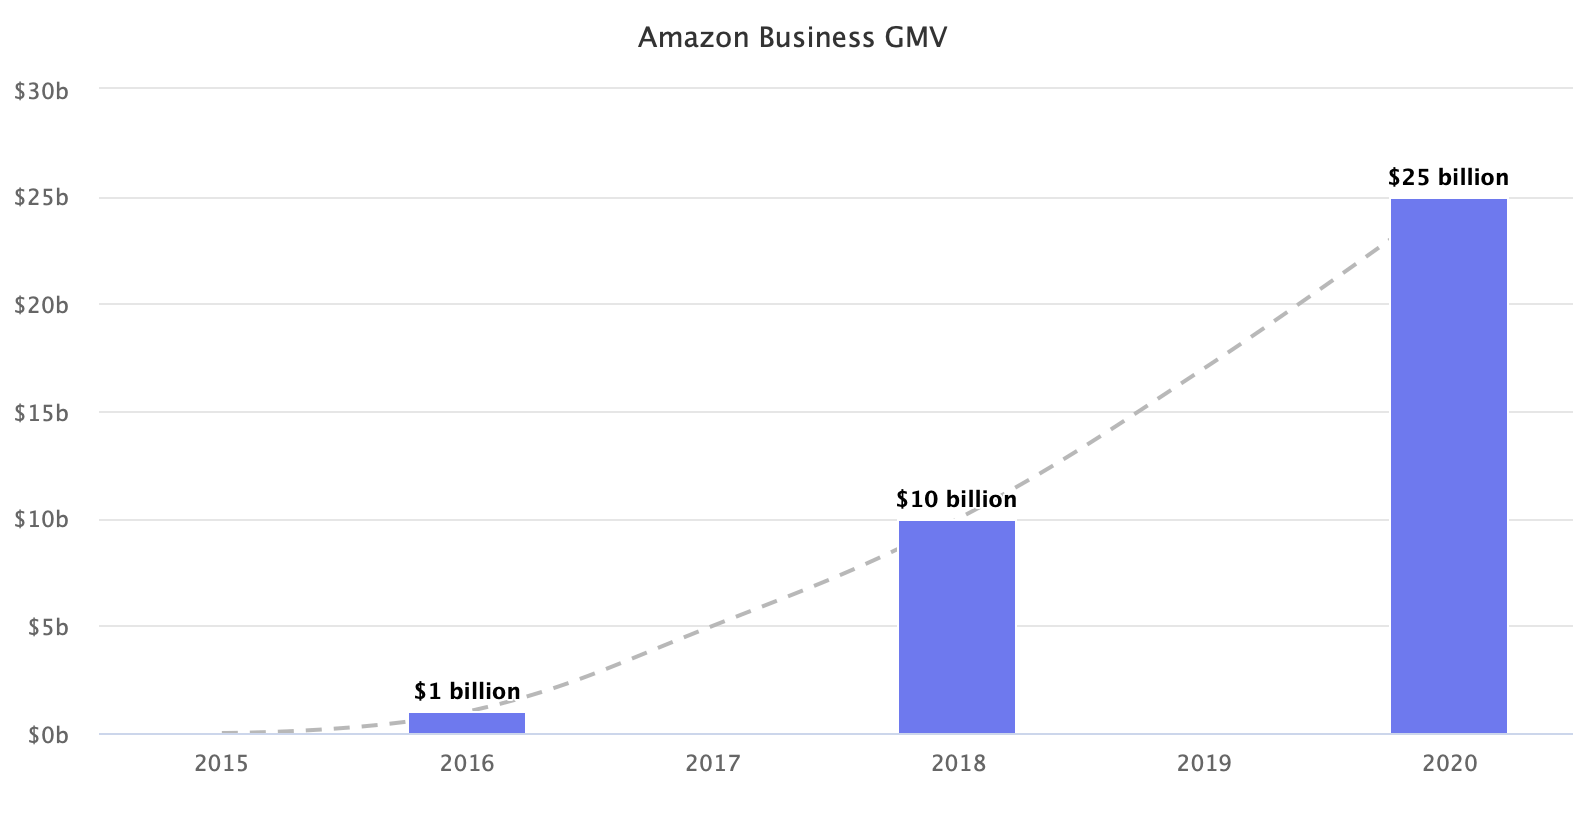 Amazon Business GMV